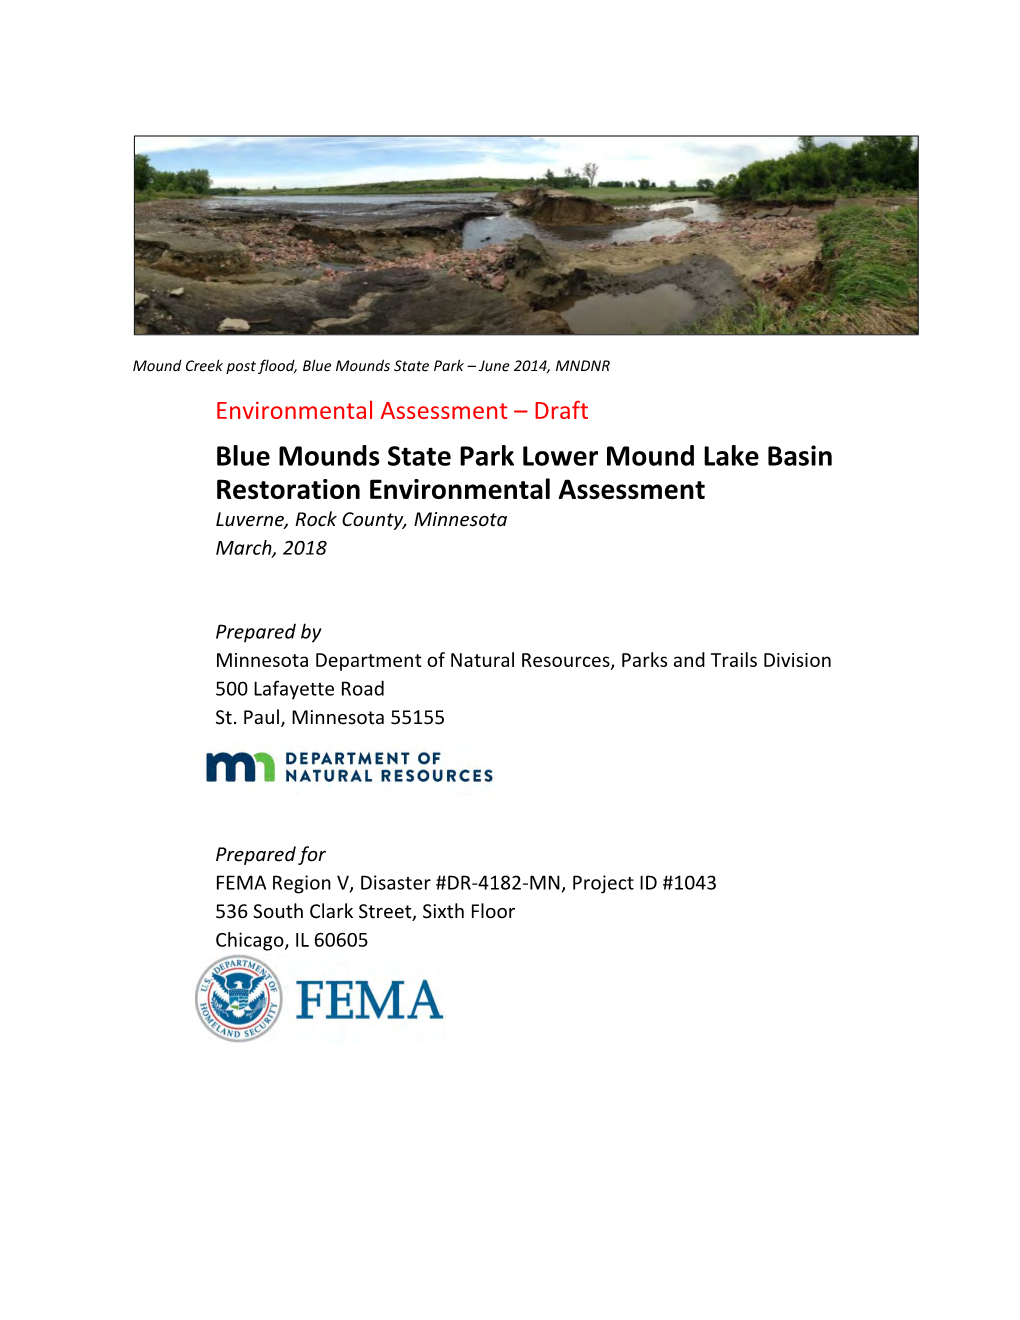 Blue Mounds State Park Lower Mound Lake Basin Restoration Environmental Assessment Luverne, Rock County, Minnesota March, 2018